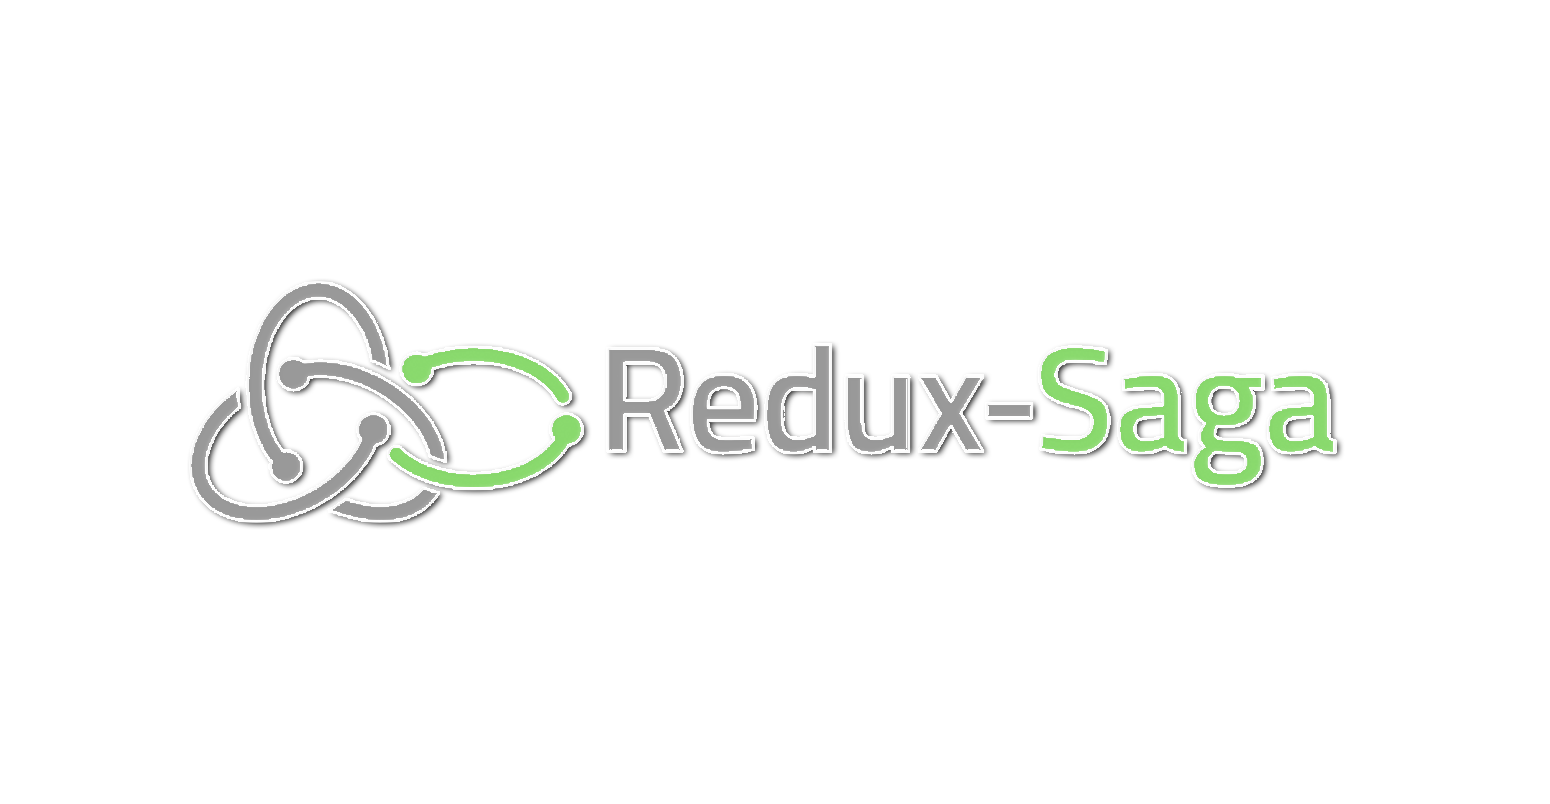 Create your Saga with Redux-Saga